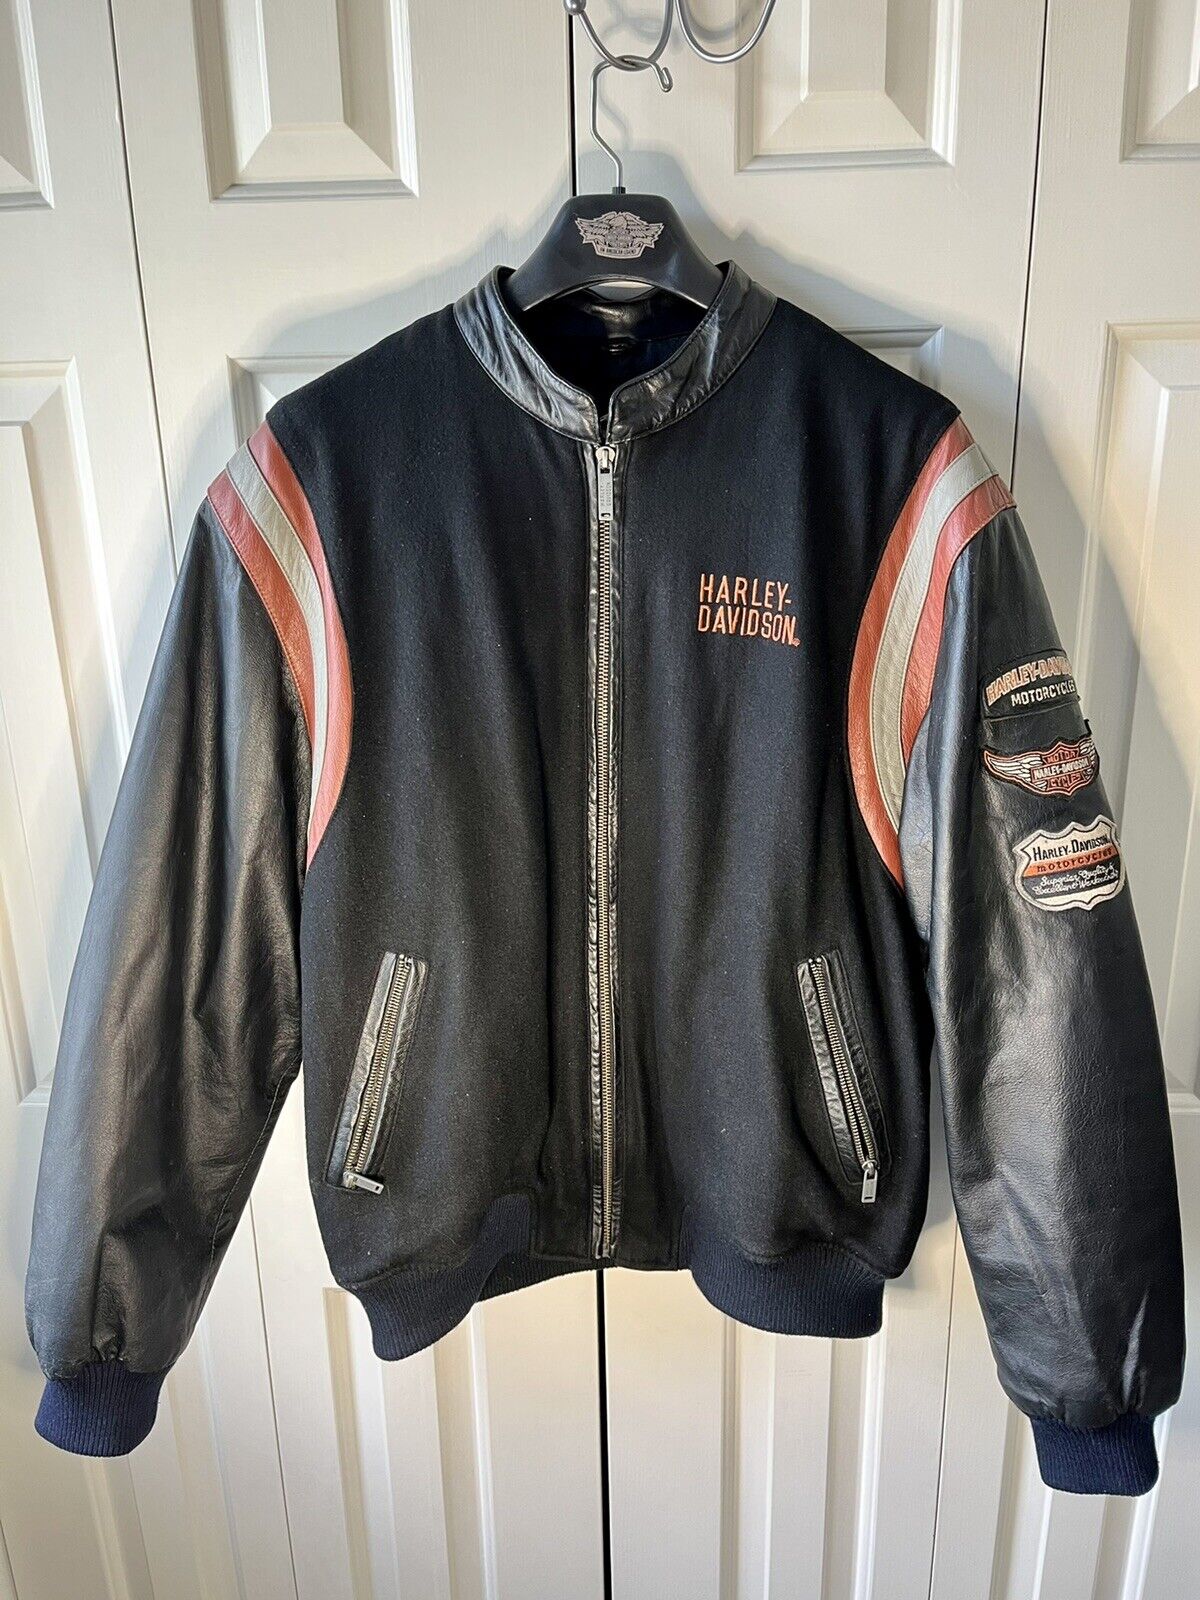 Harley Davidson Wool Leather Jacket Mens XL 103819 03402 LIVE TO RIDE Black Orng